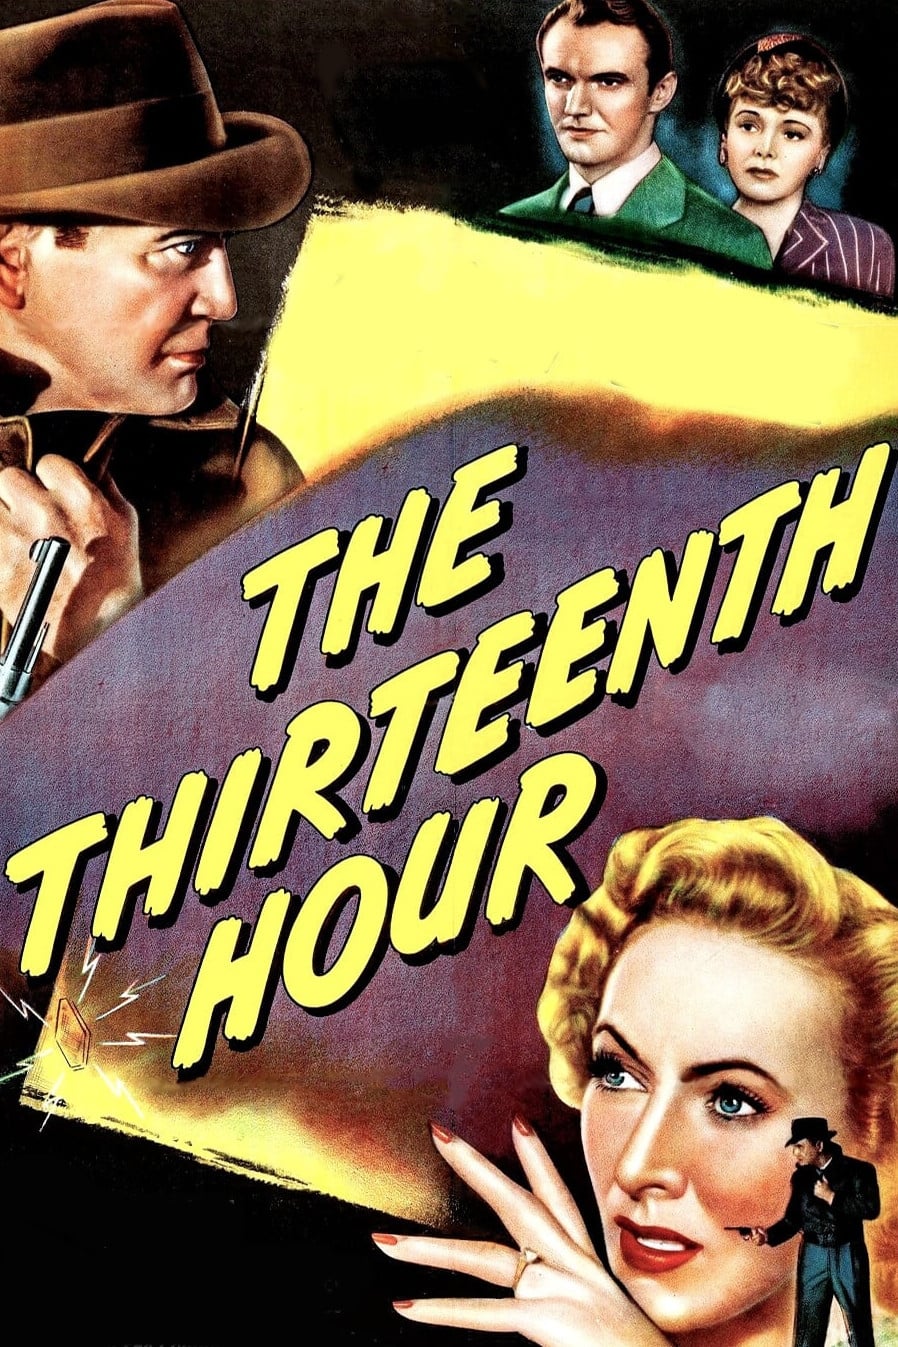 The Thirteenth Hour (1947)